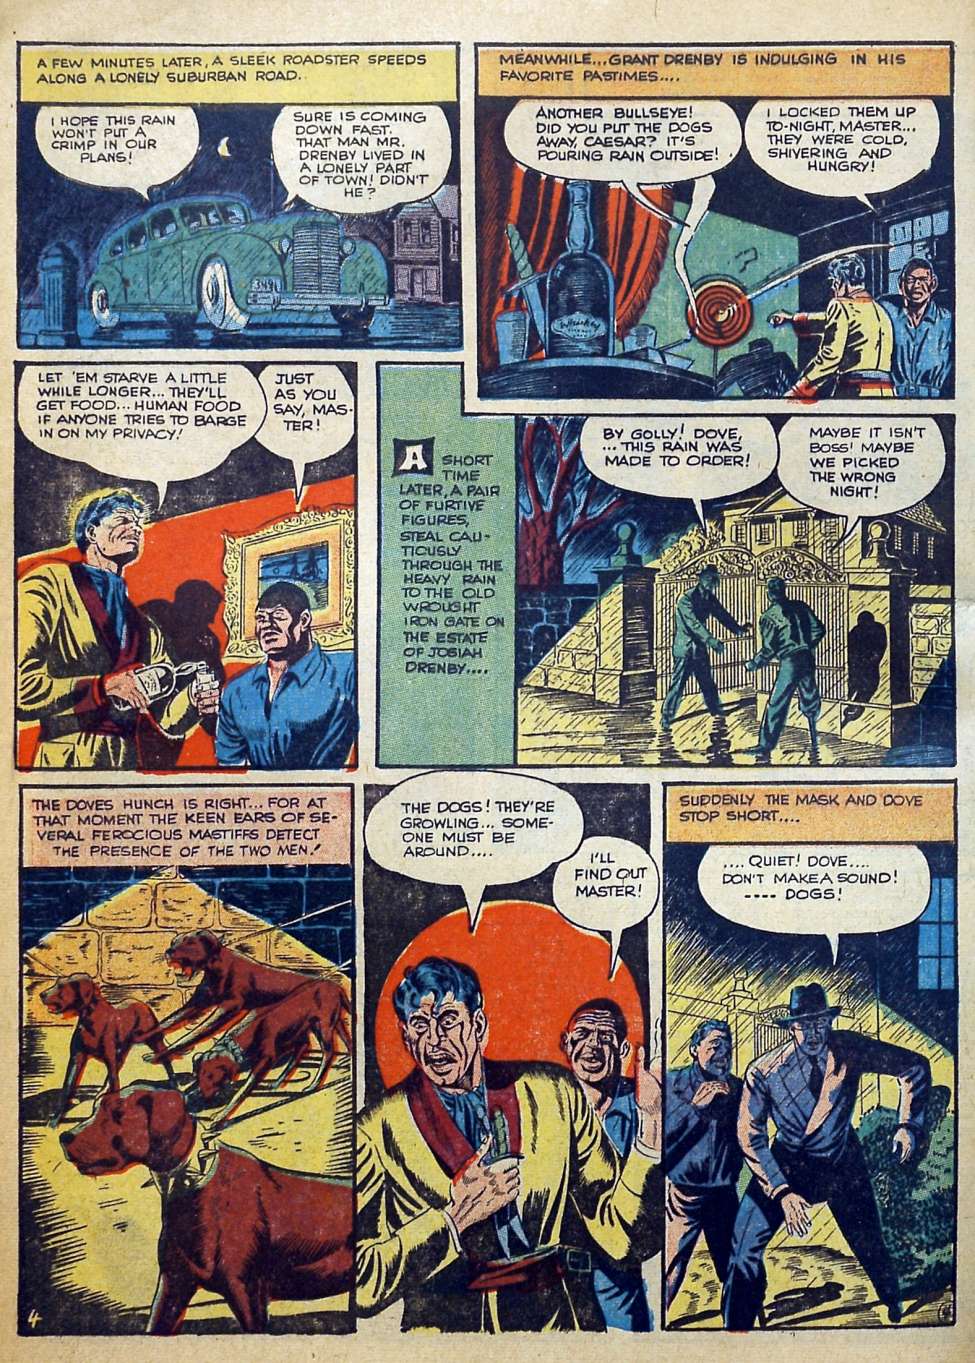 Suspense Comics #3 from 1944 1 Nazi comic